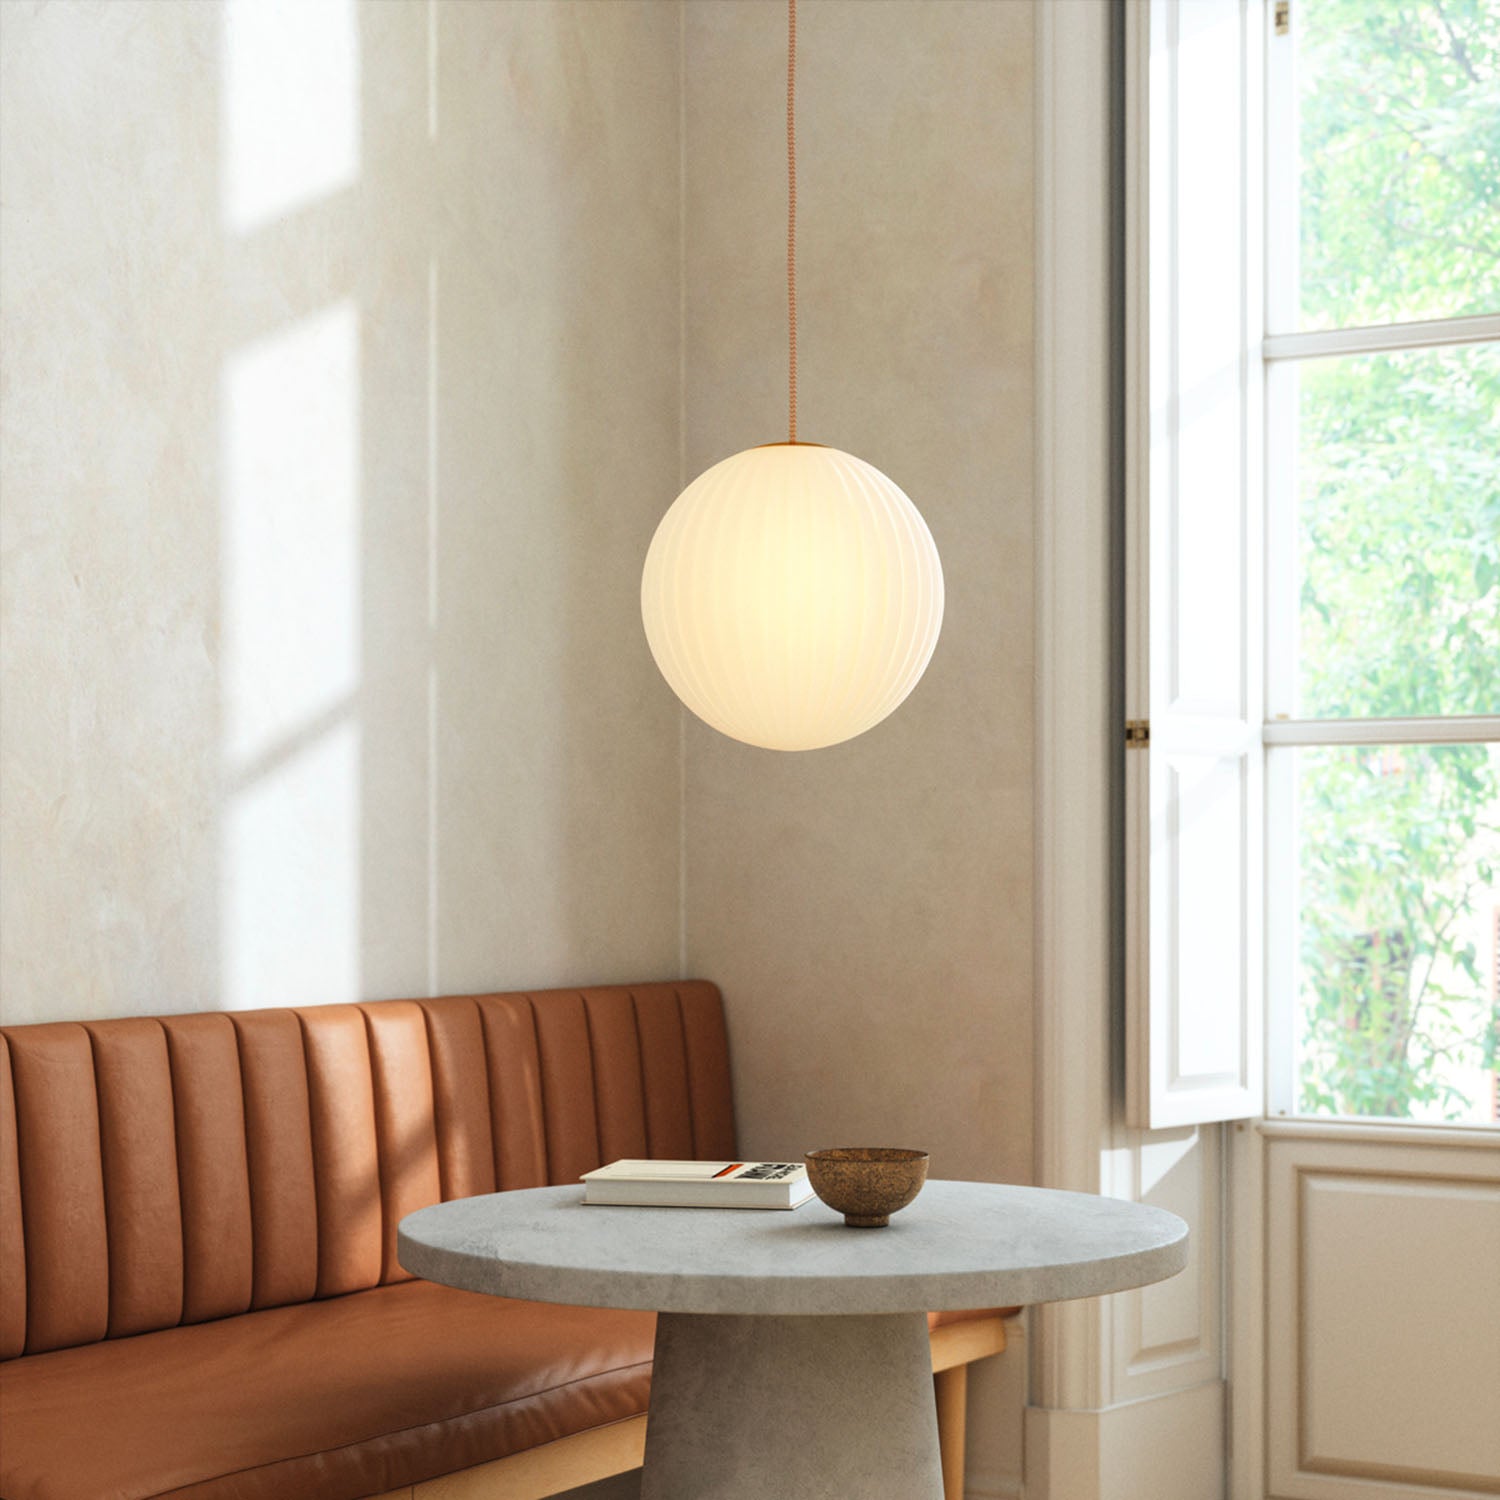 MODECO - Matte white glass pendant light, elegant and minimalist